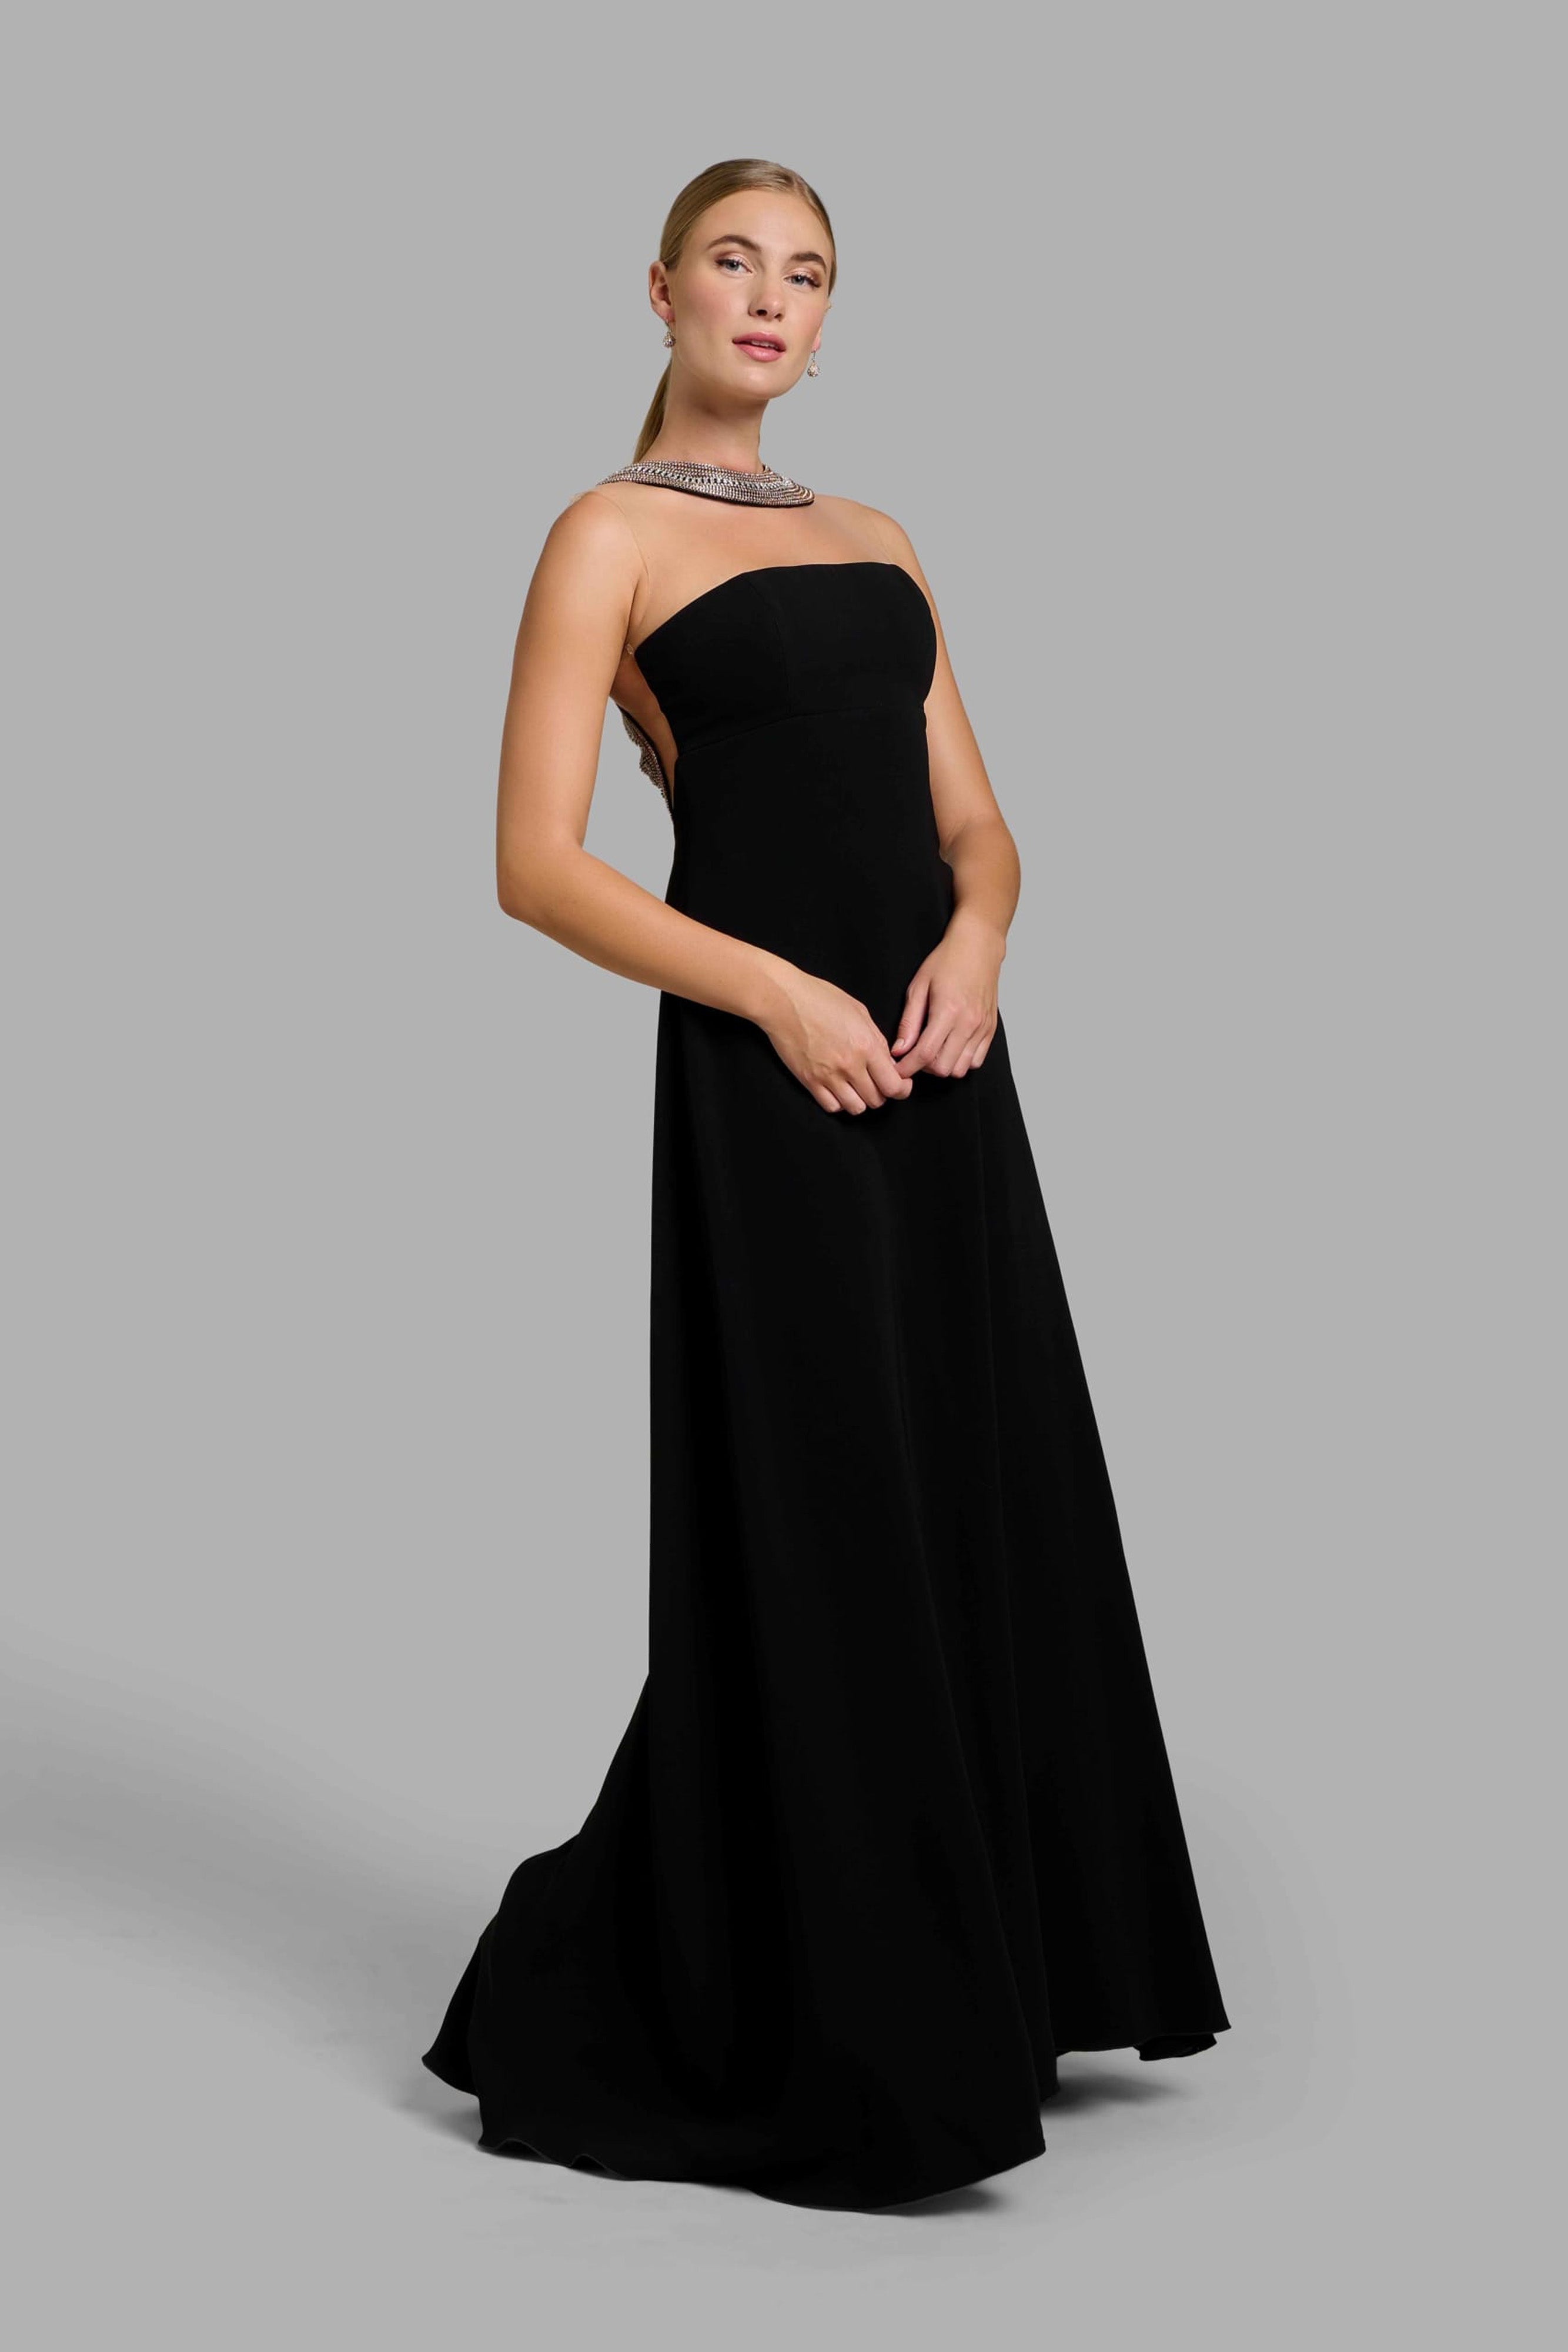 Traditional Long Black Dress